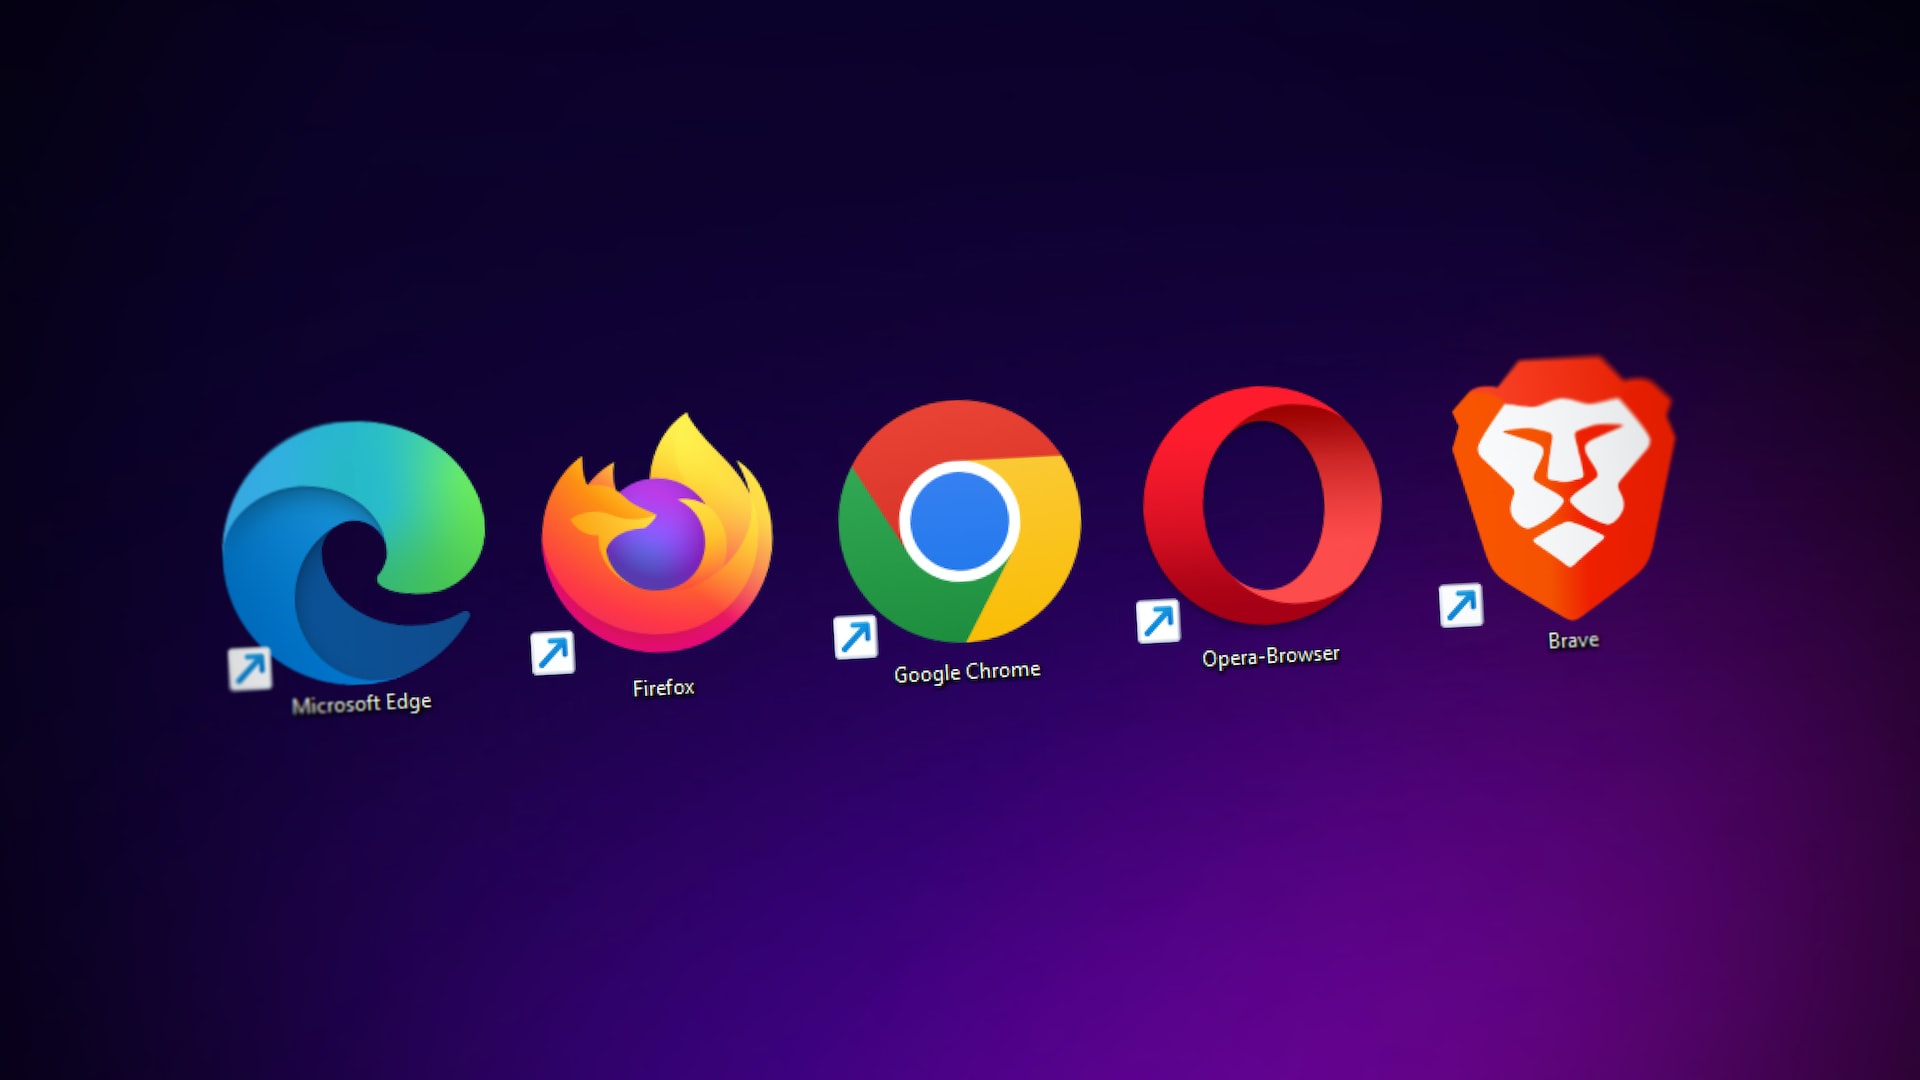 web browser logos: microsoft edge, firefox, google chrome, opera, and brave